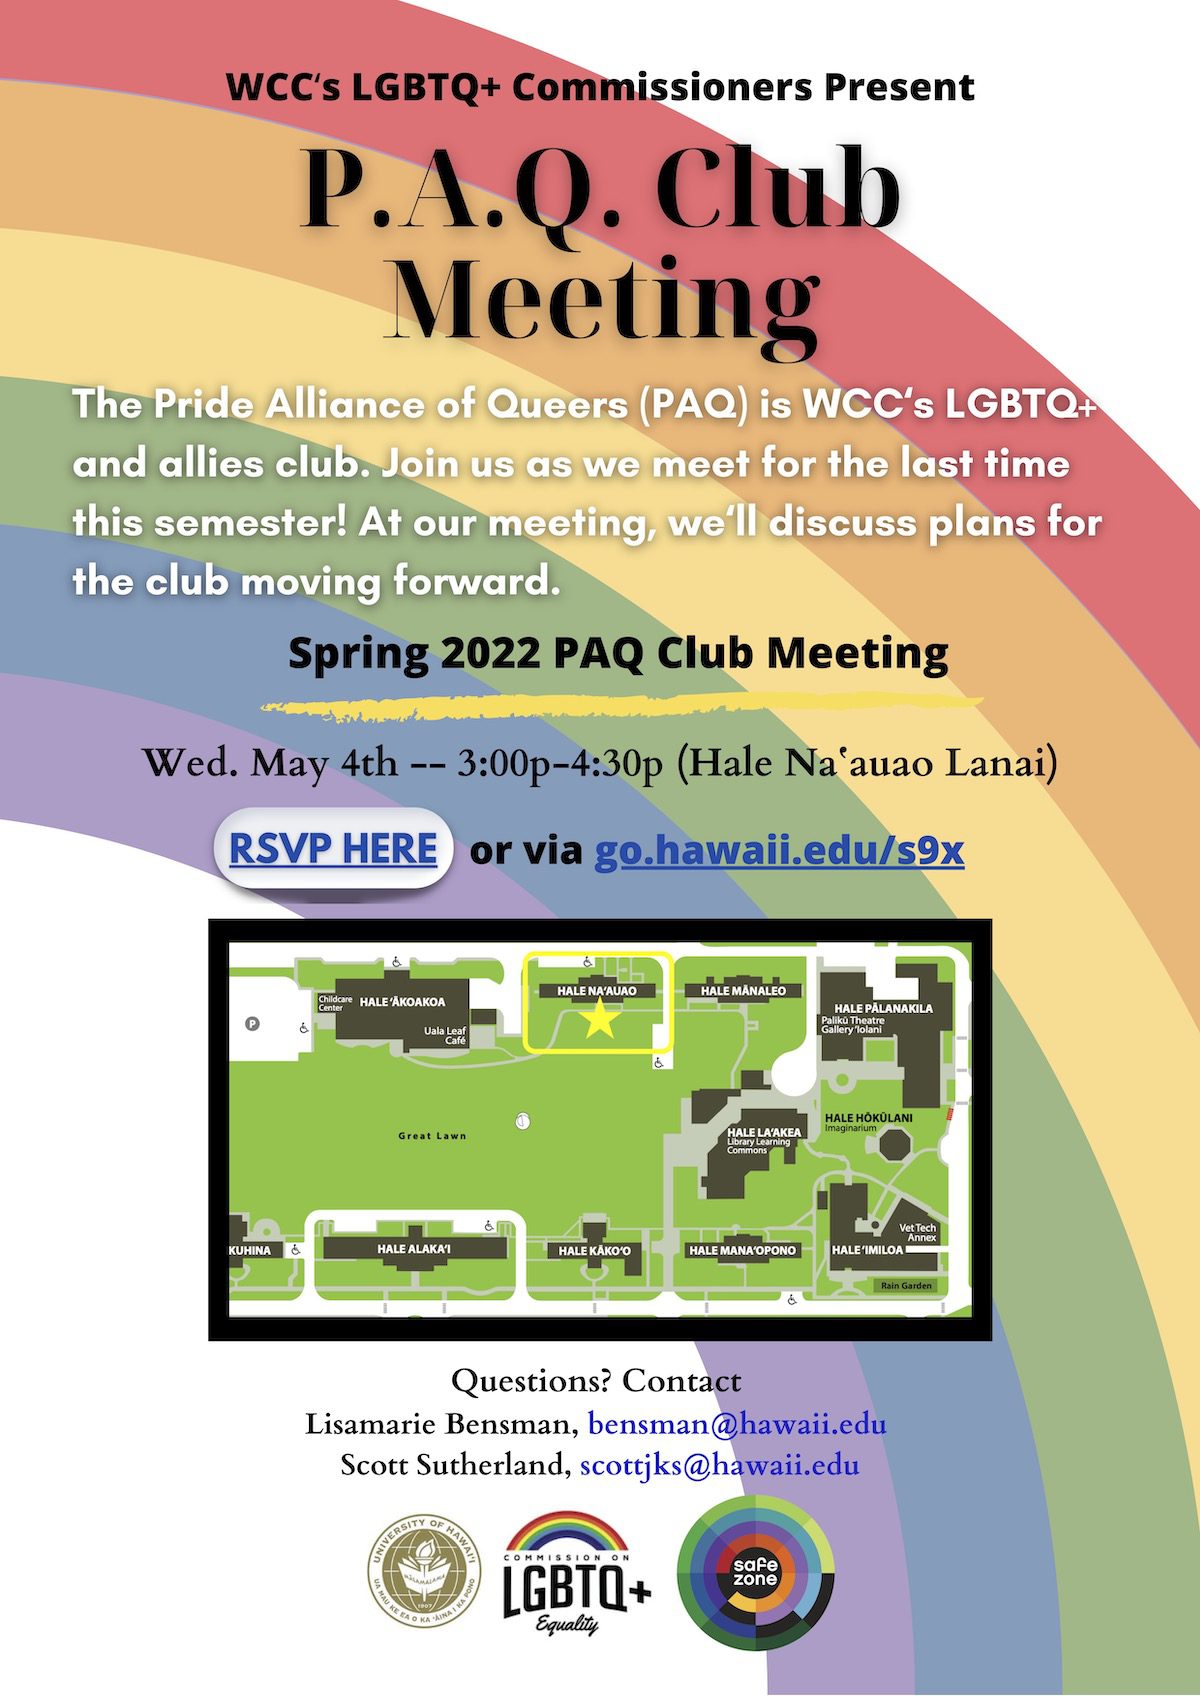 Safe Zone Trainings & PAQ Club Meeting Tues, April 12 at 3pm on the Hale Na‘auao lanai